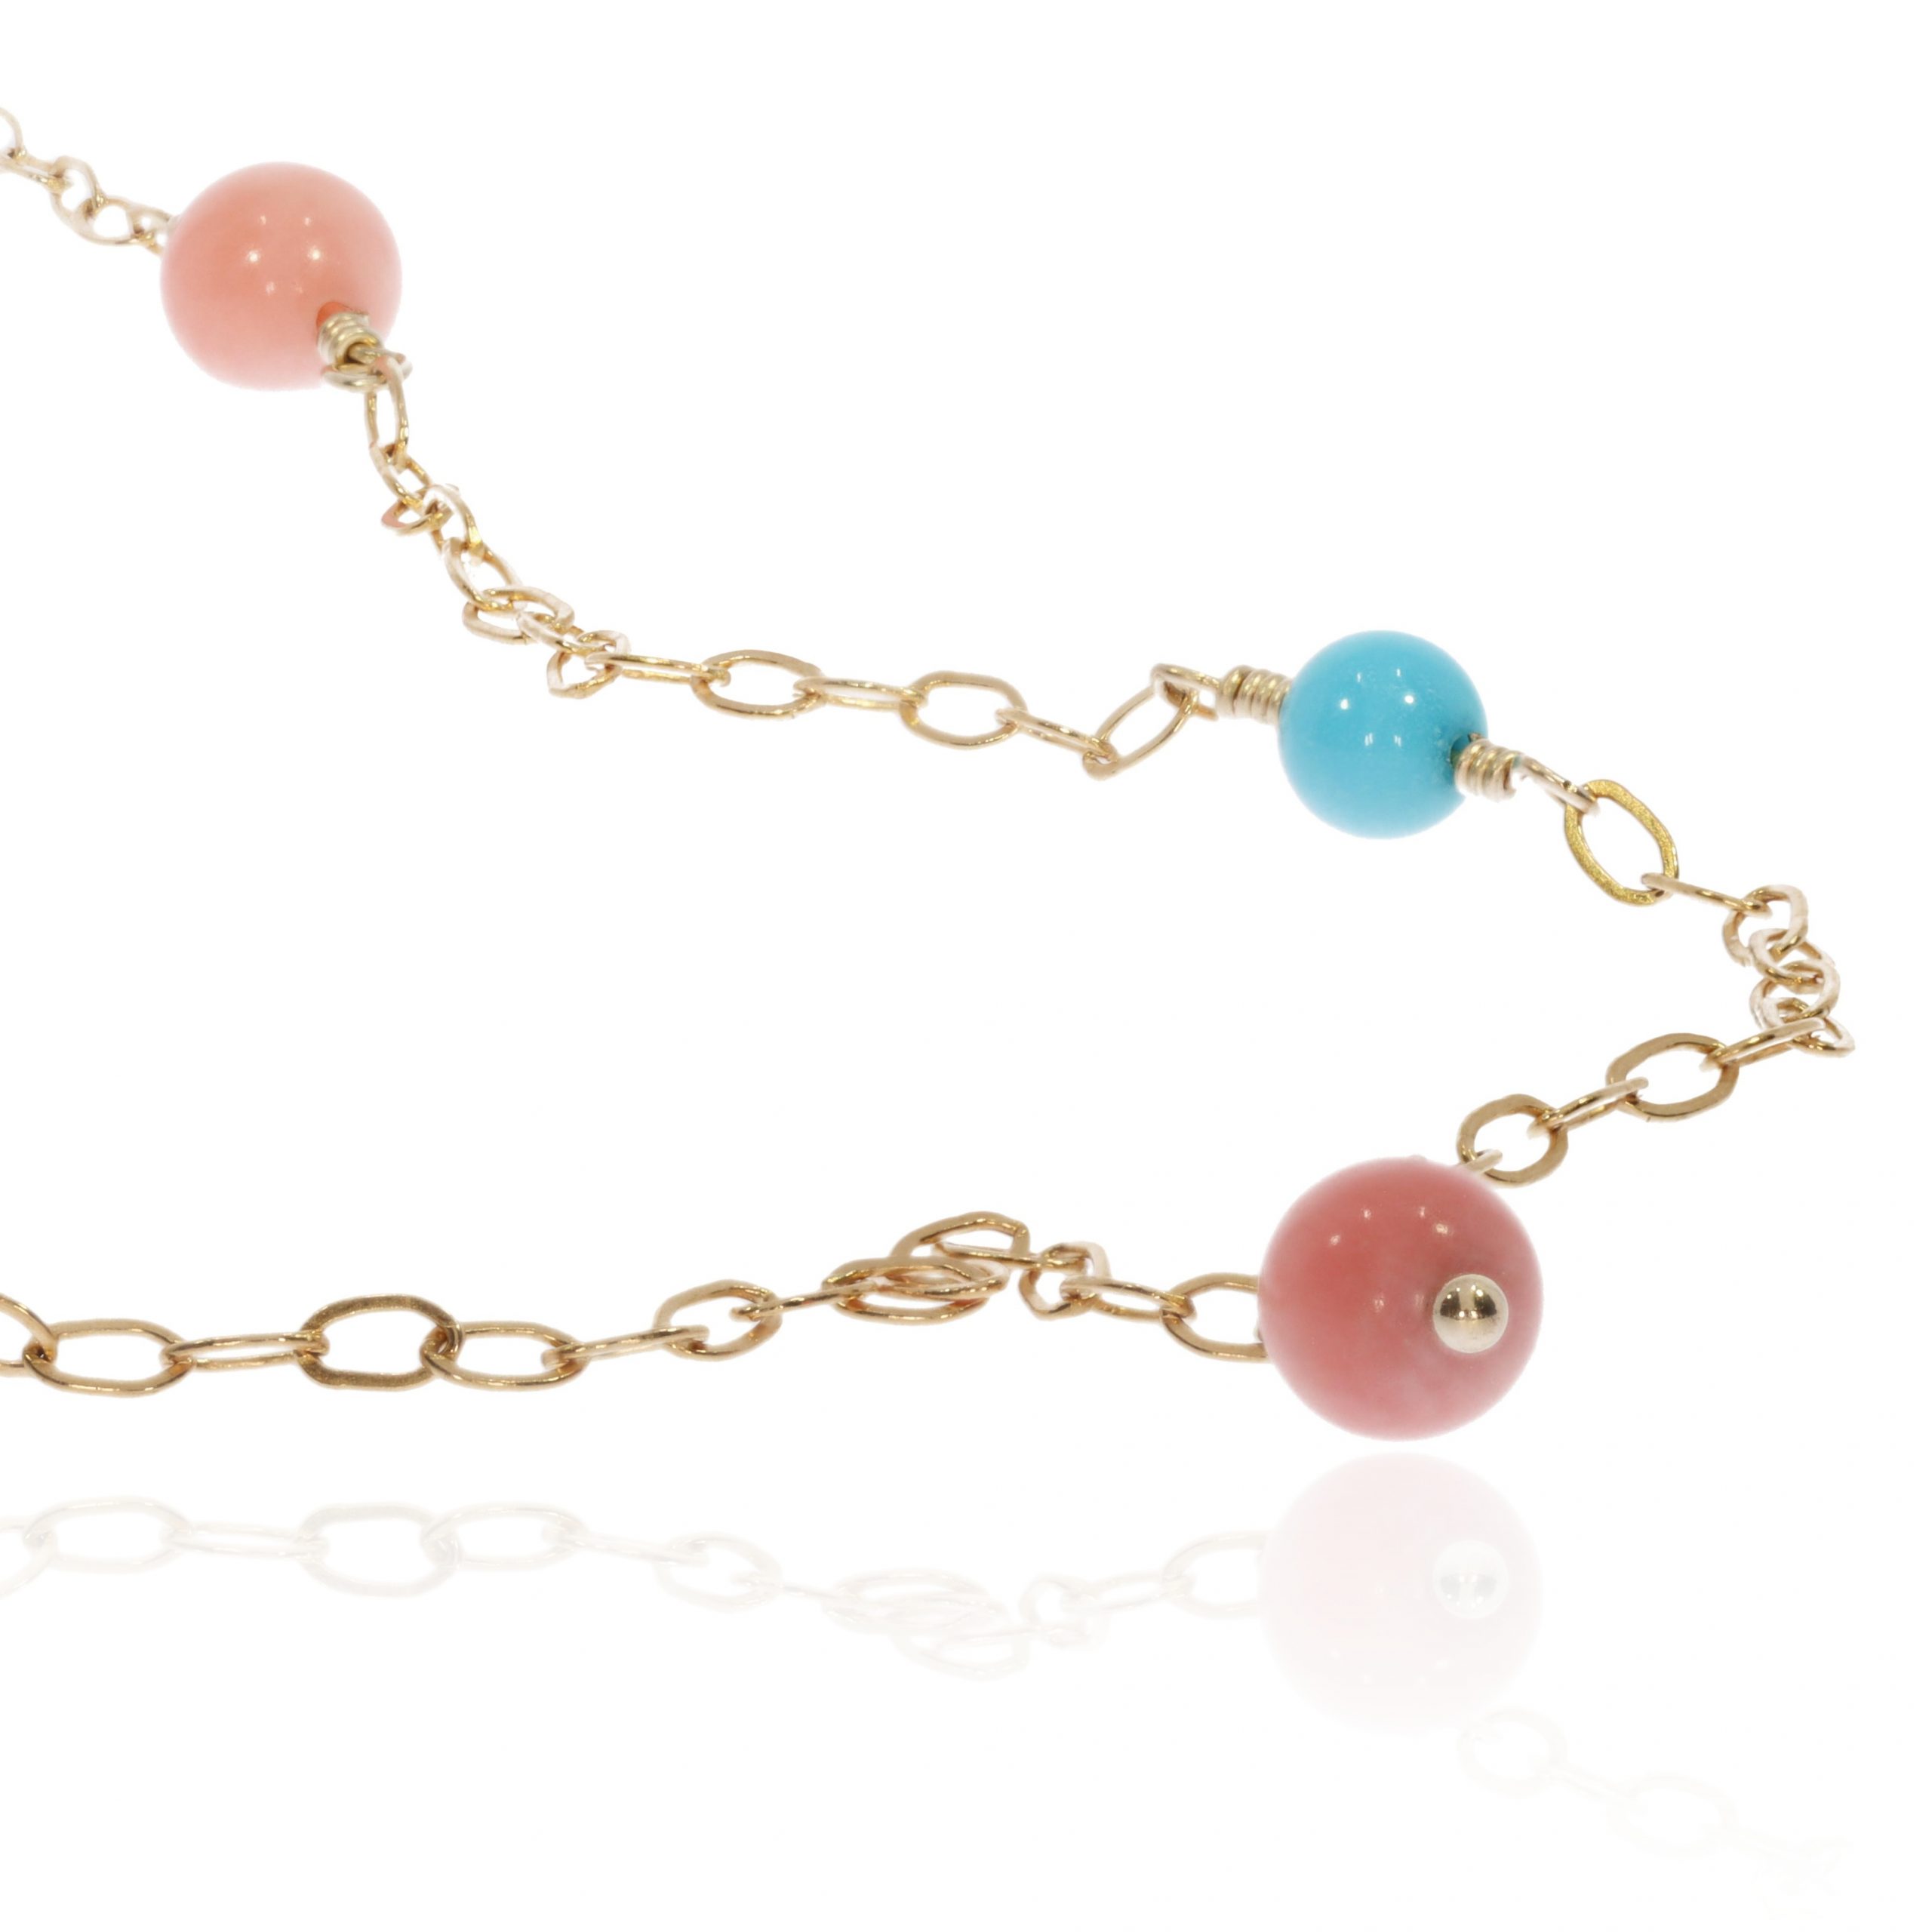 Pretty Pink and Turquoise Necklace By Heidi Kjeldsen Jewellery NL1269 close